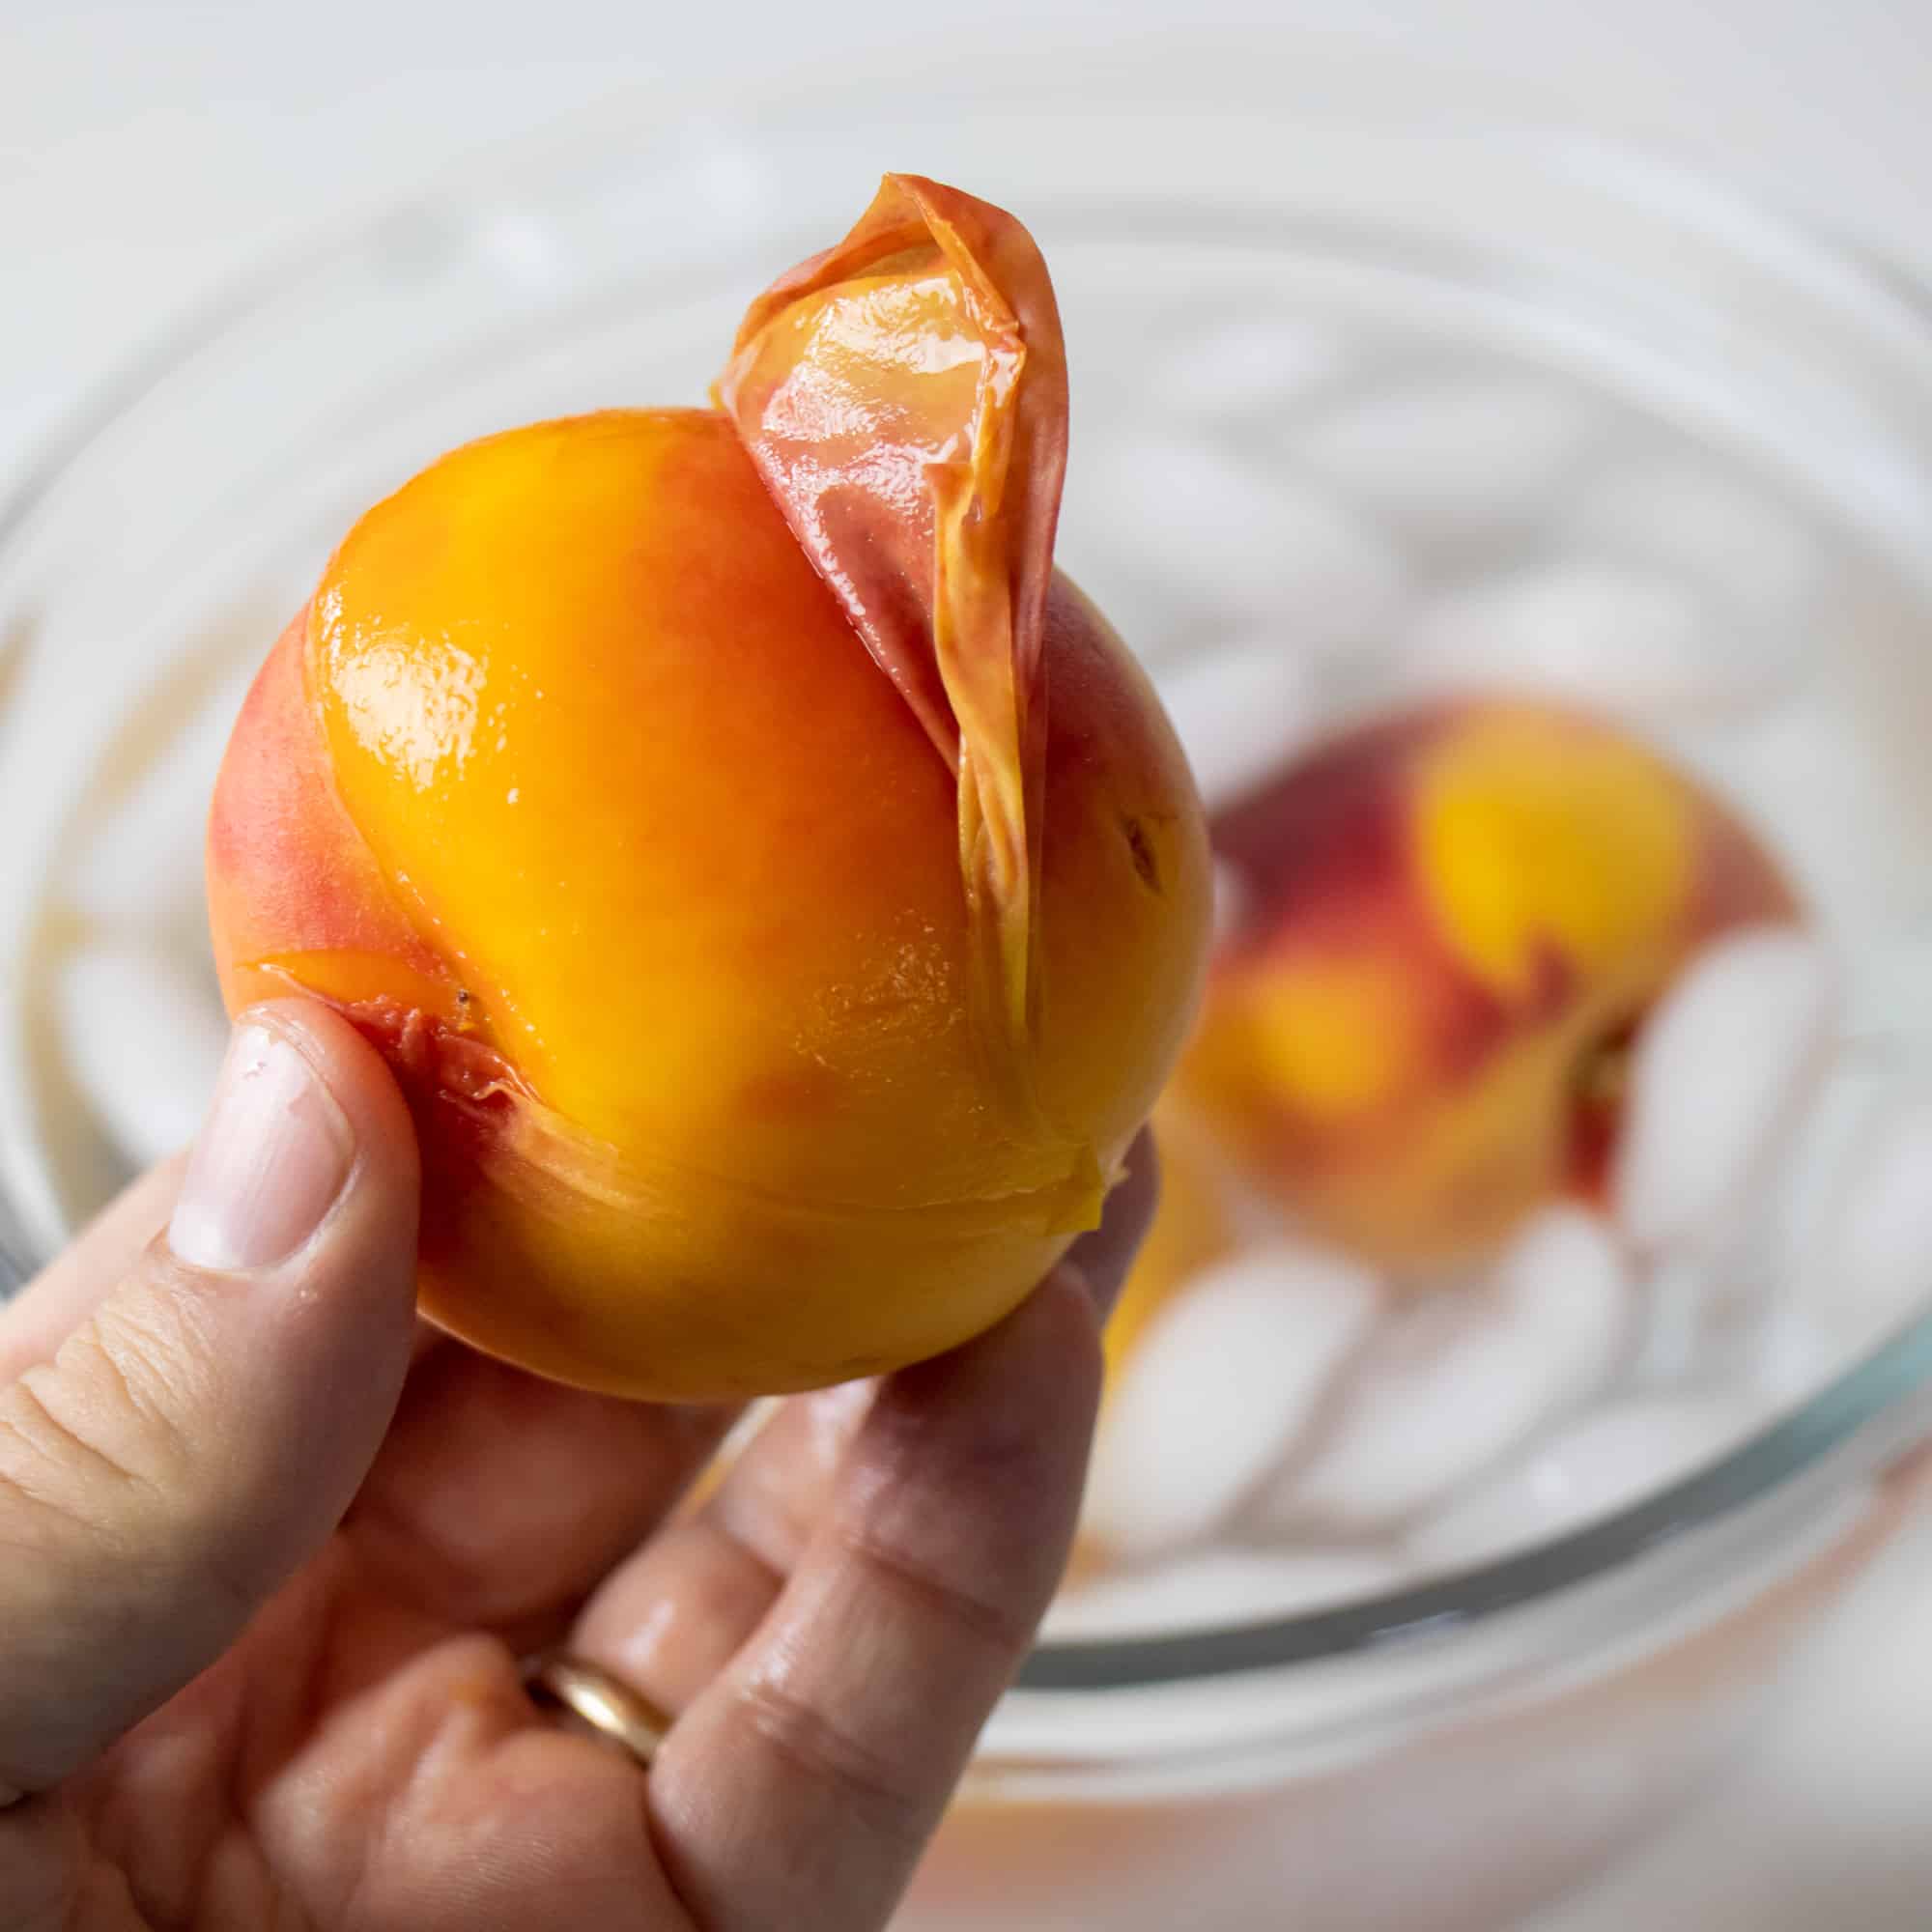 Peel the peach skin off